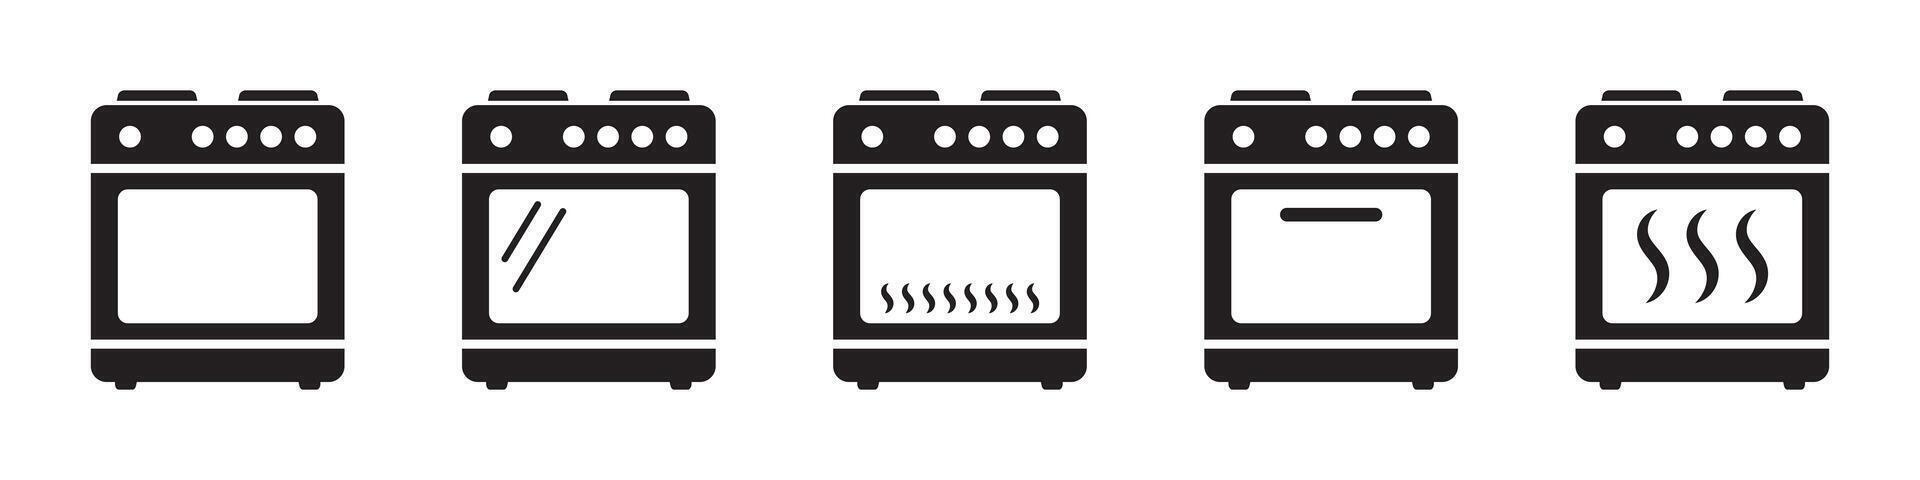 estufa horno icono, vector gas cocina. cocina Cocinando aparato. vector ilustración.